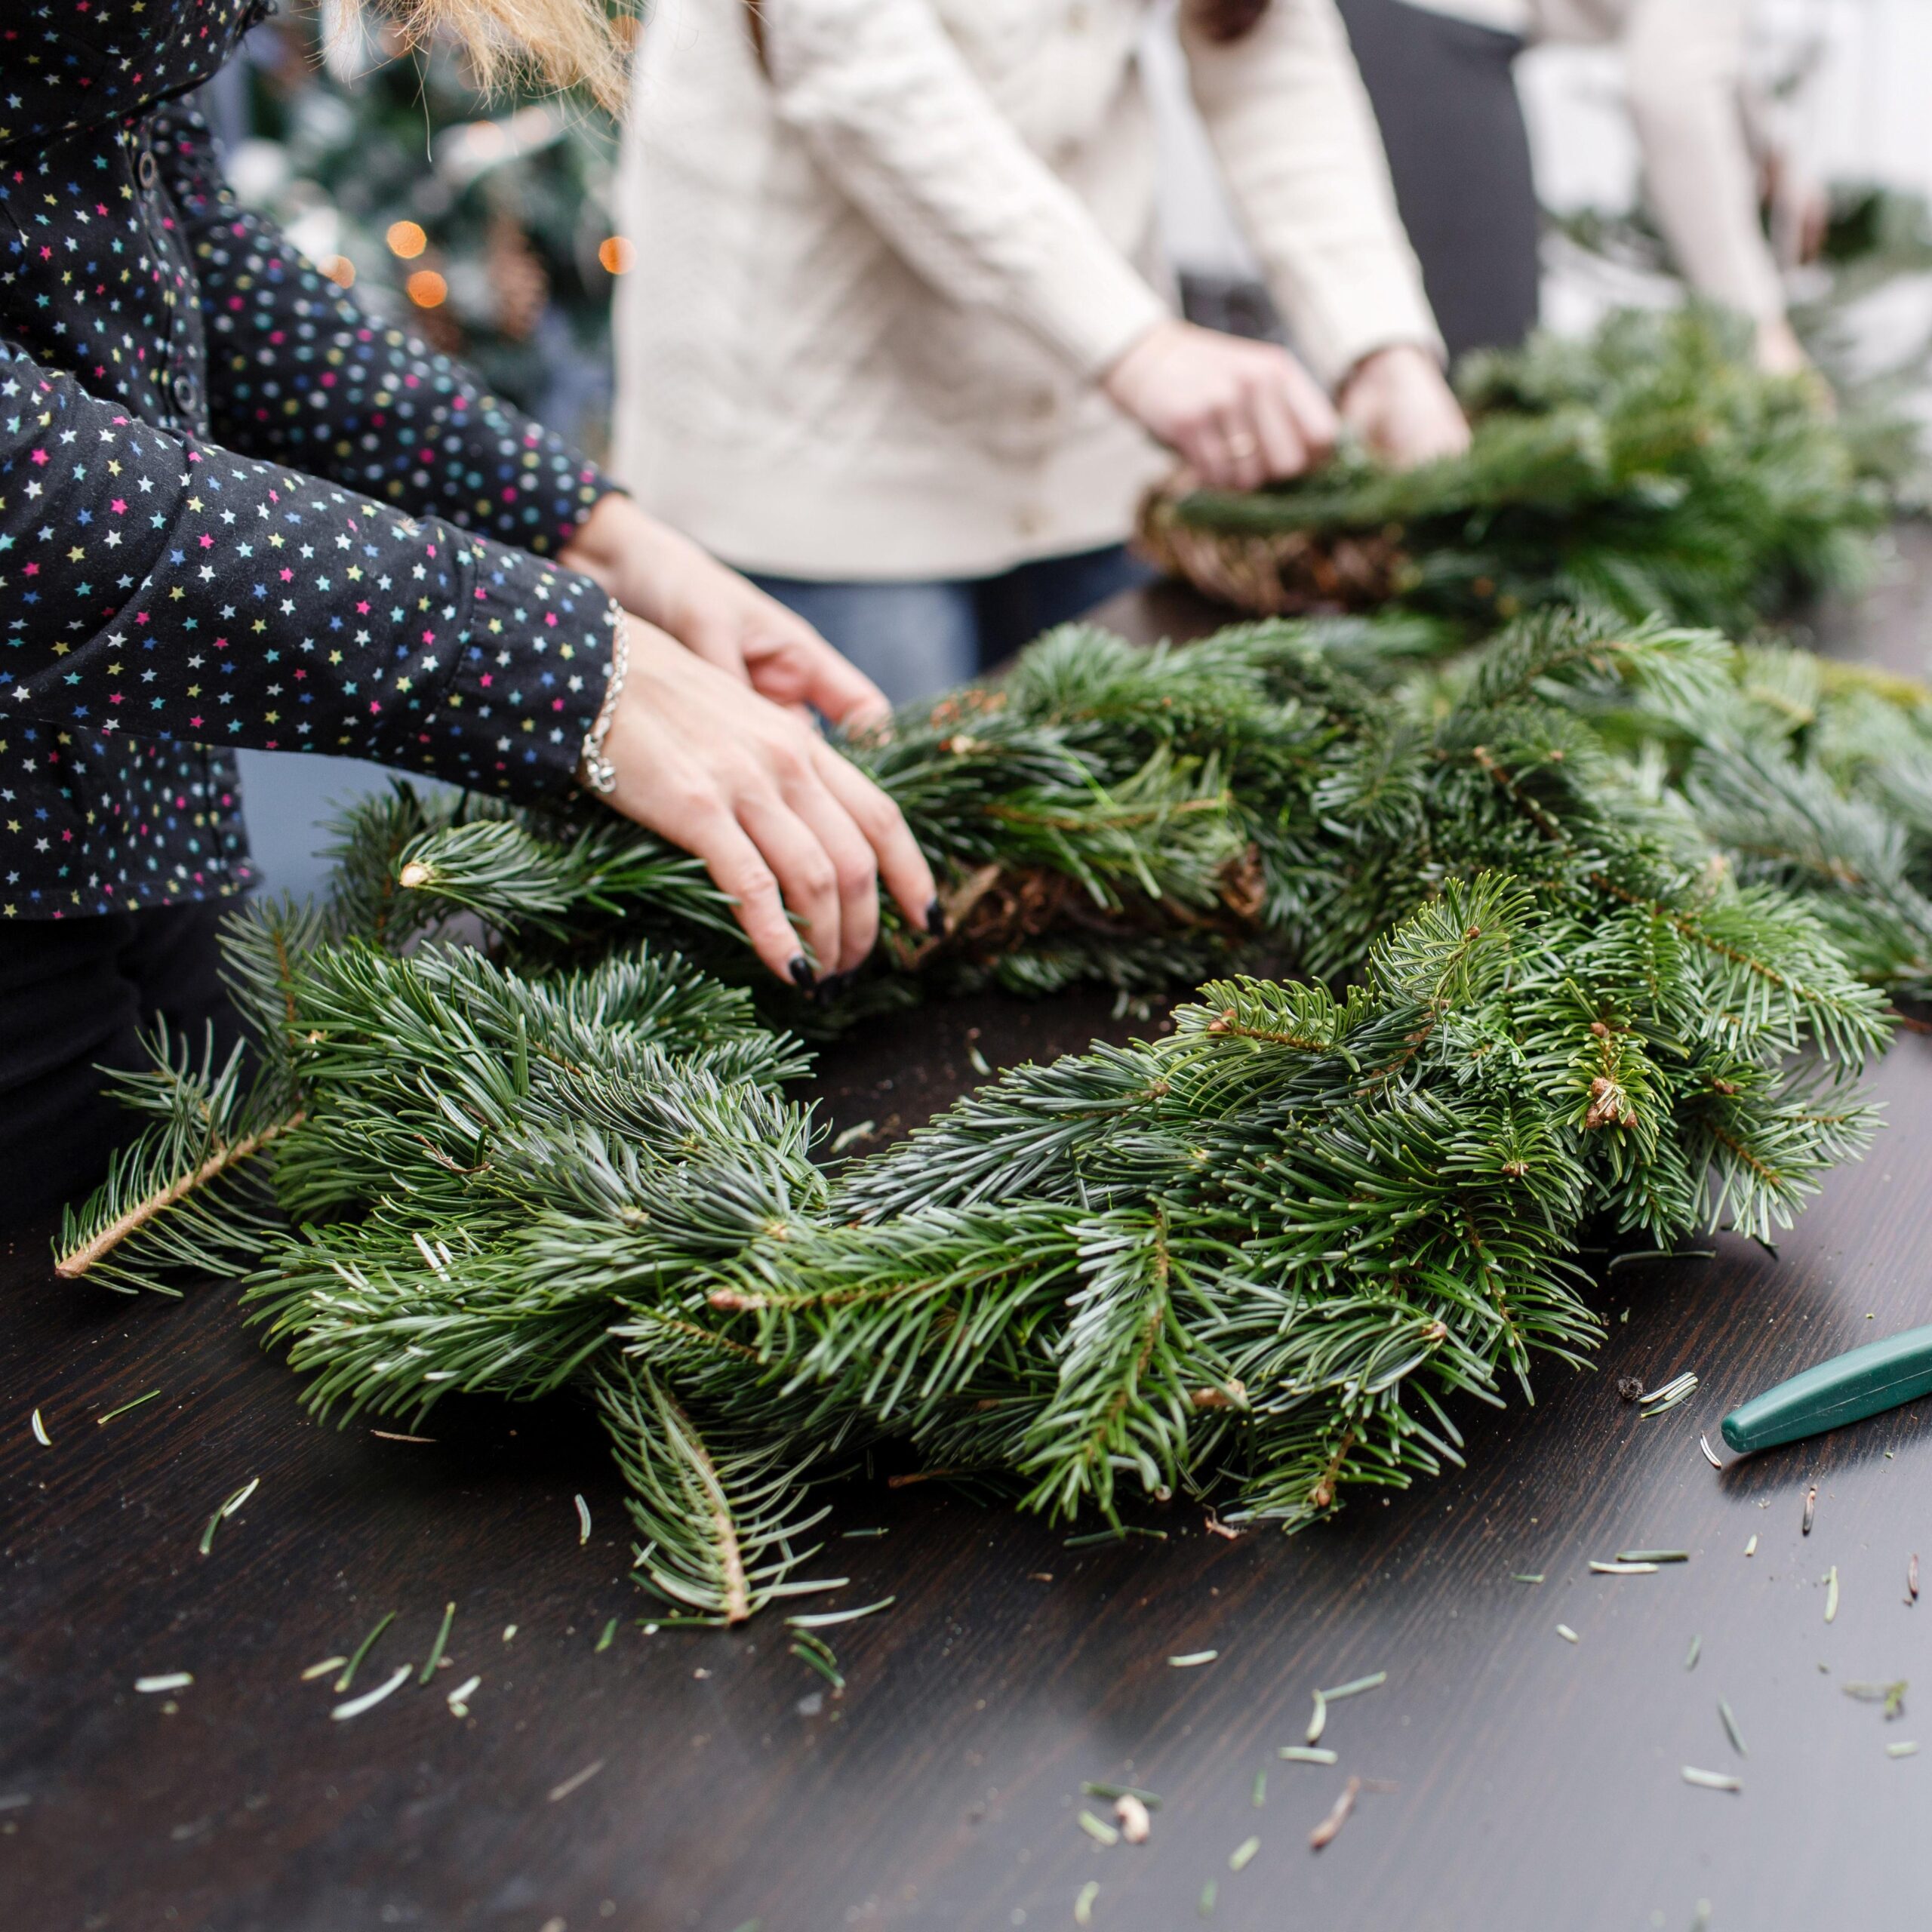 Wreath-making at Natural Christmas at The Ridges Sanctuary